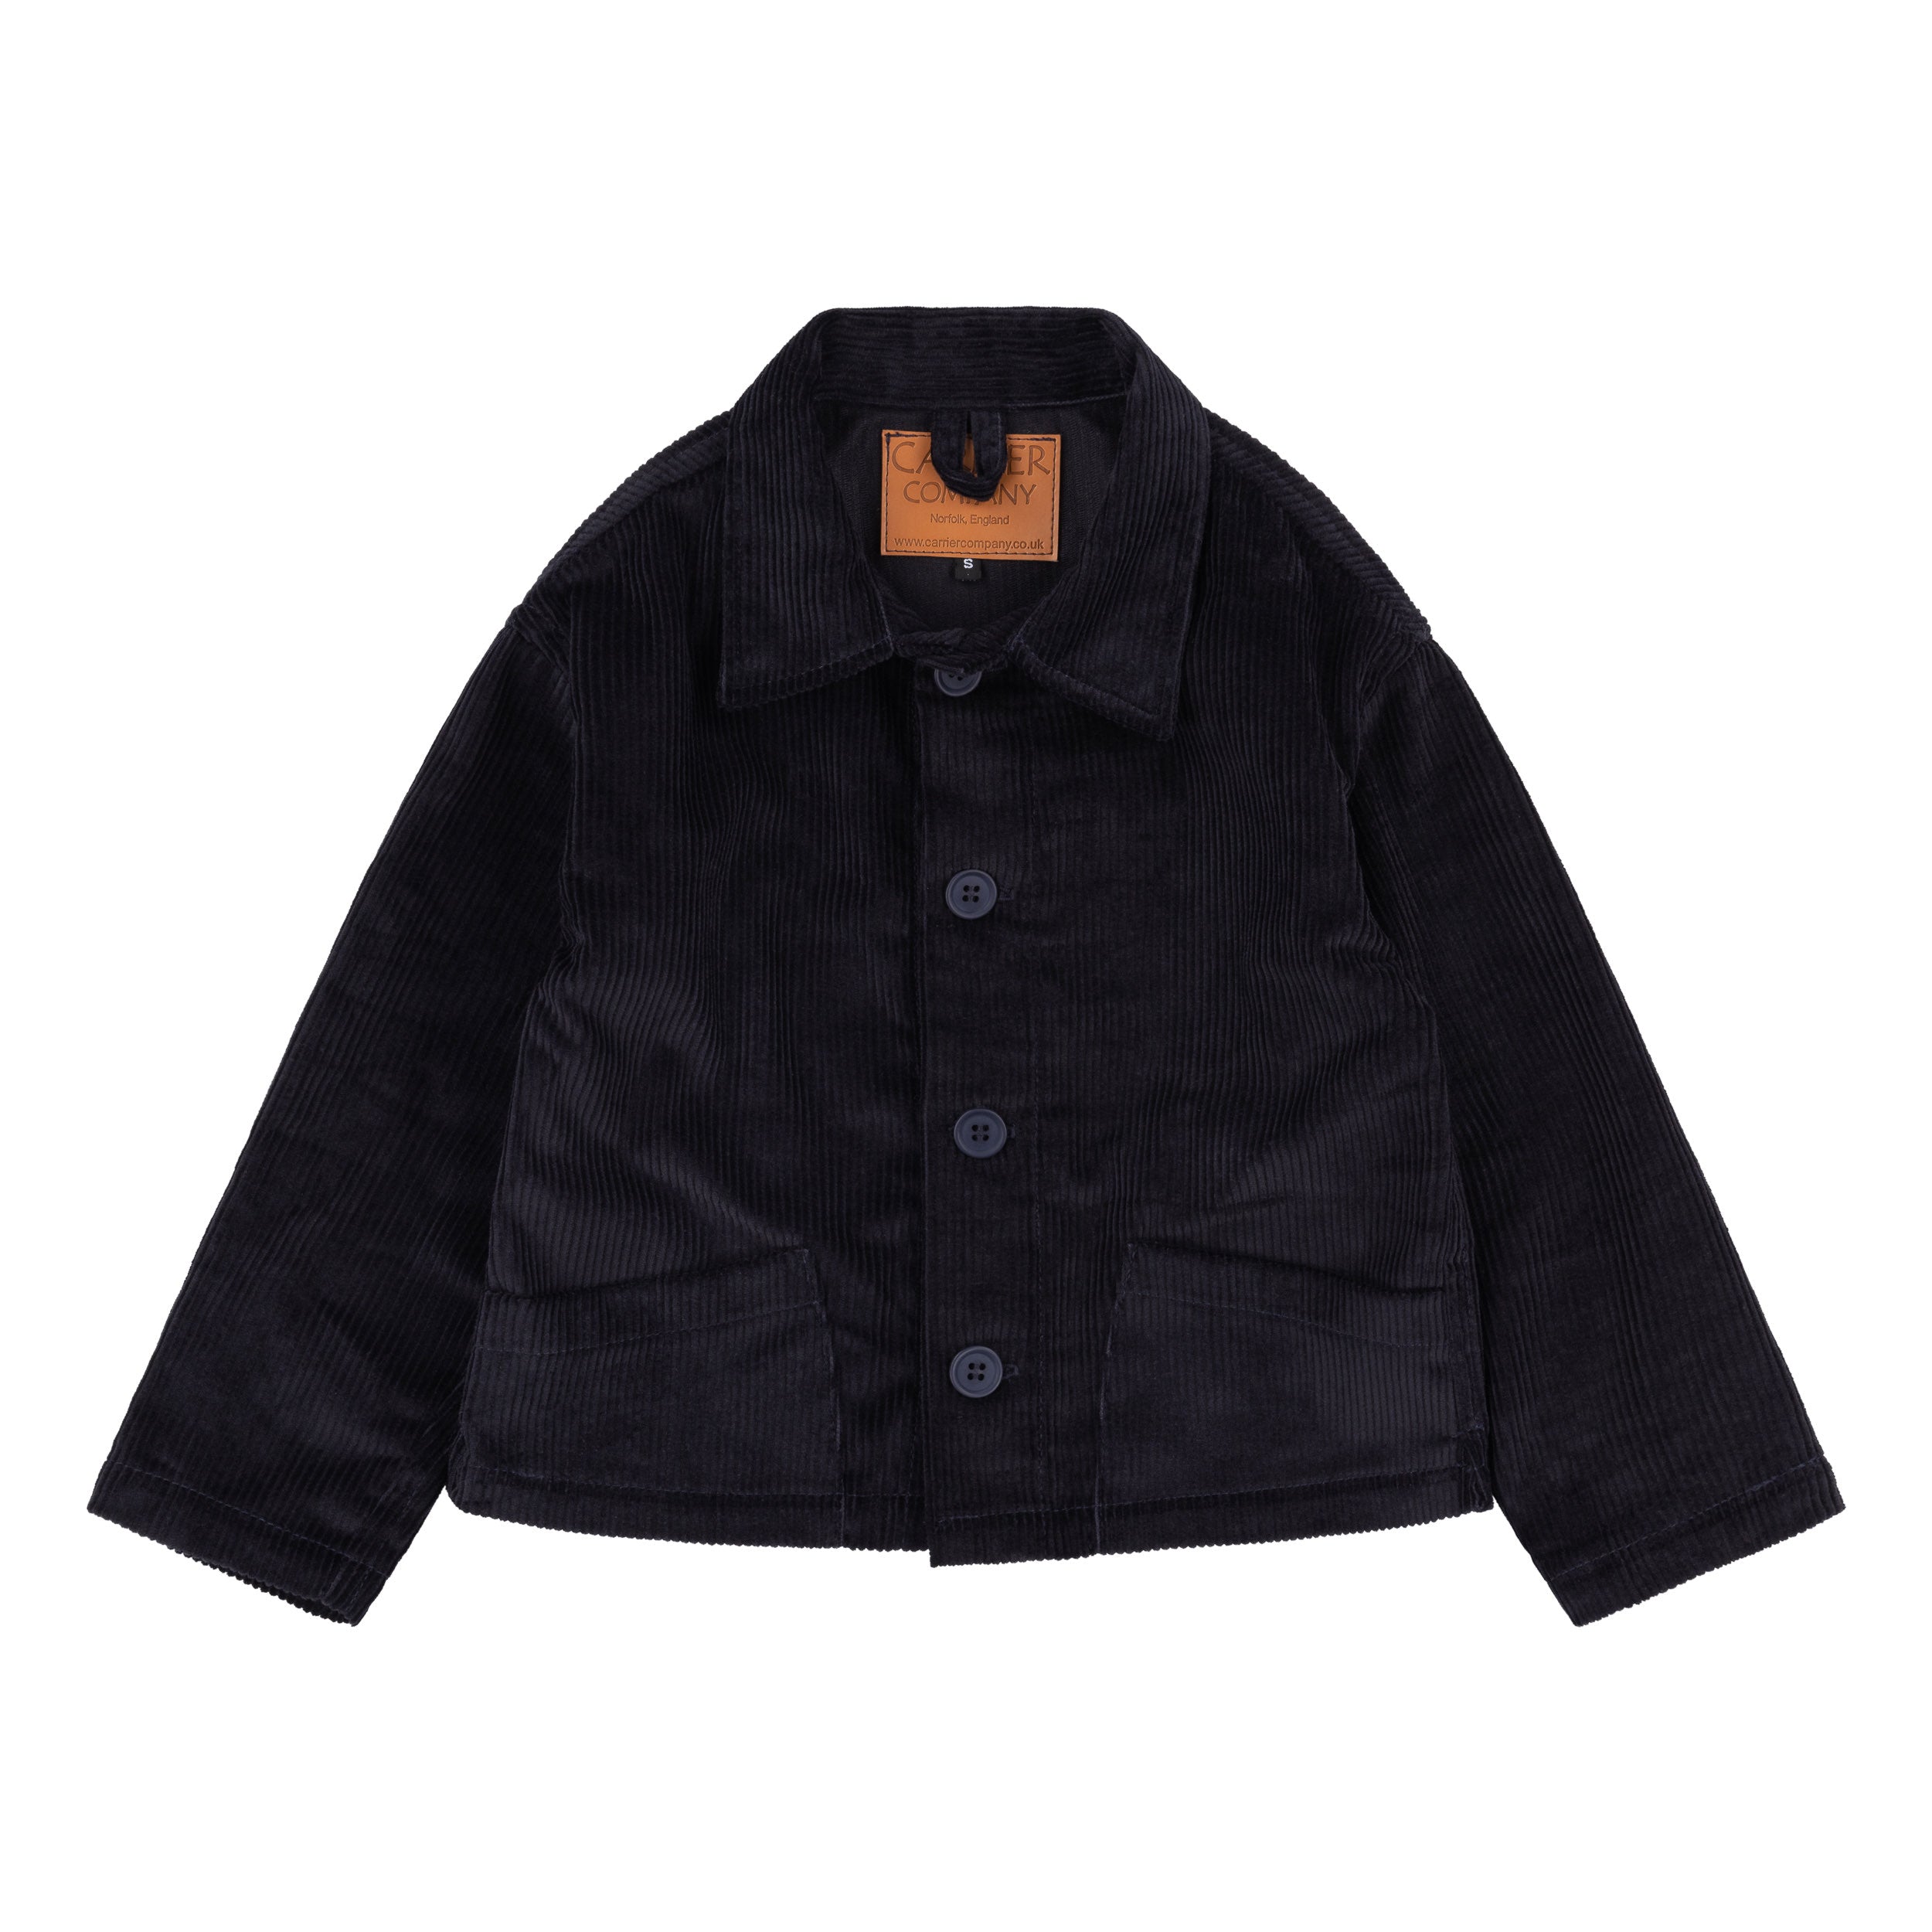 Carrier Company Children's Corduroy Jacket in Black